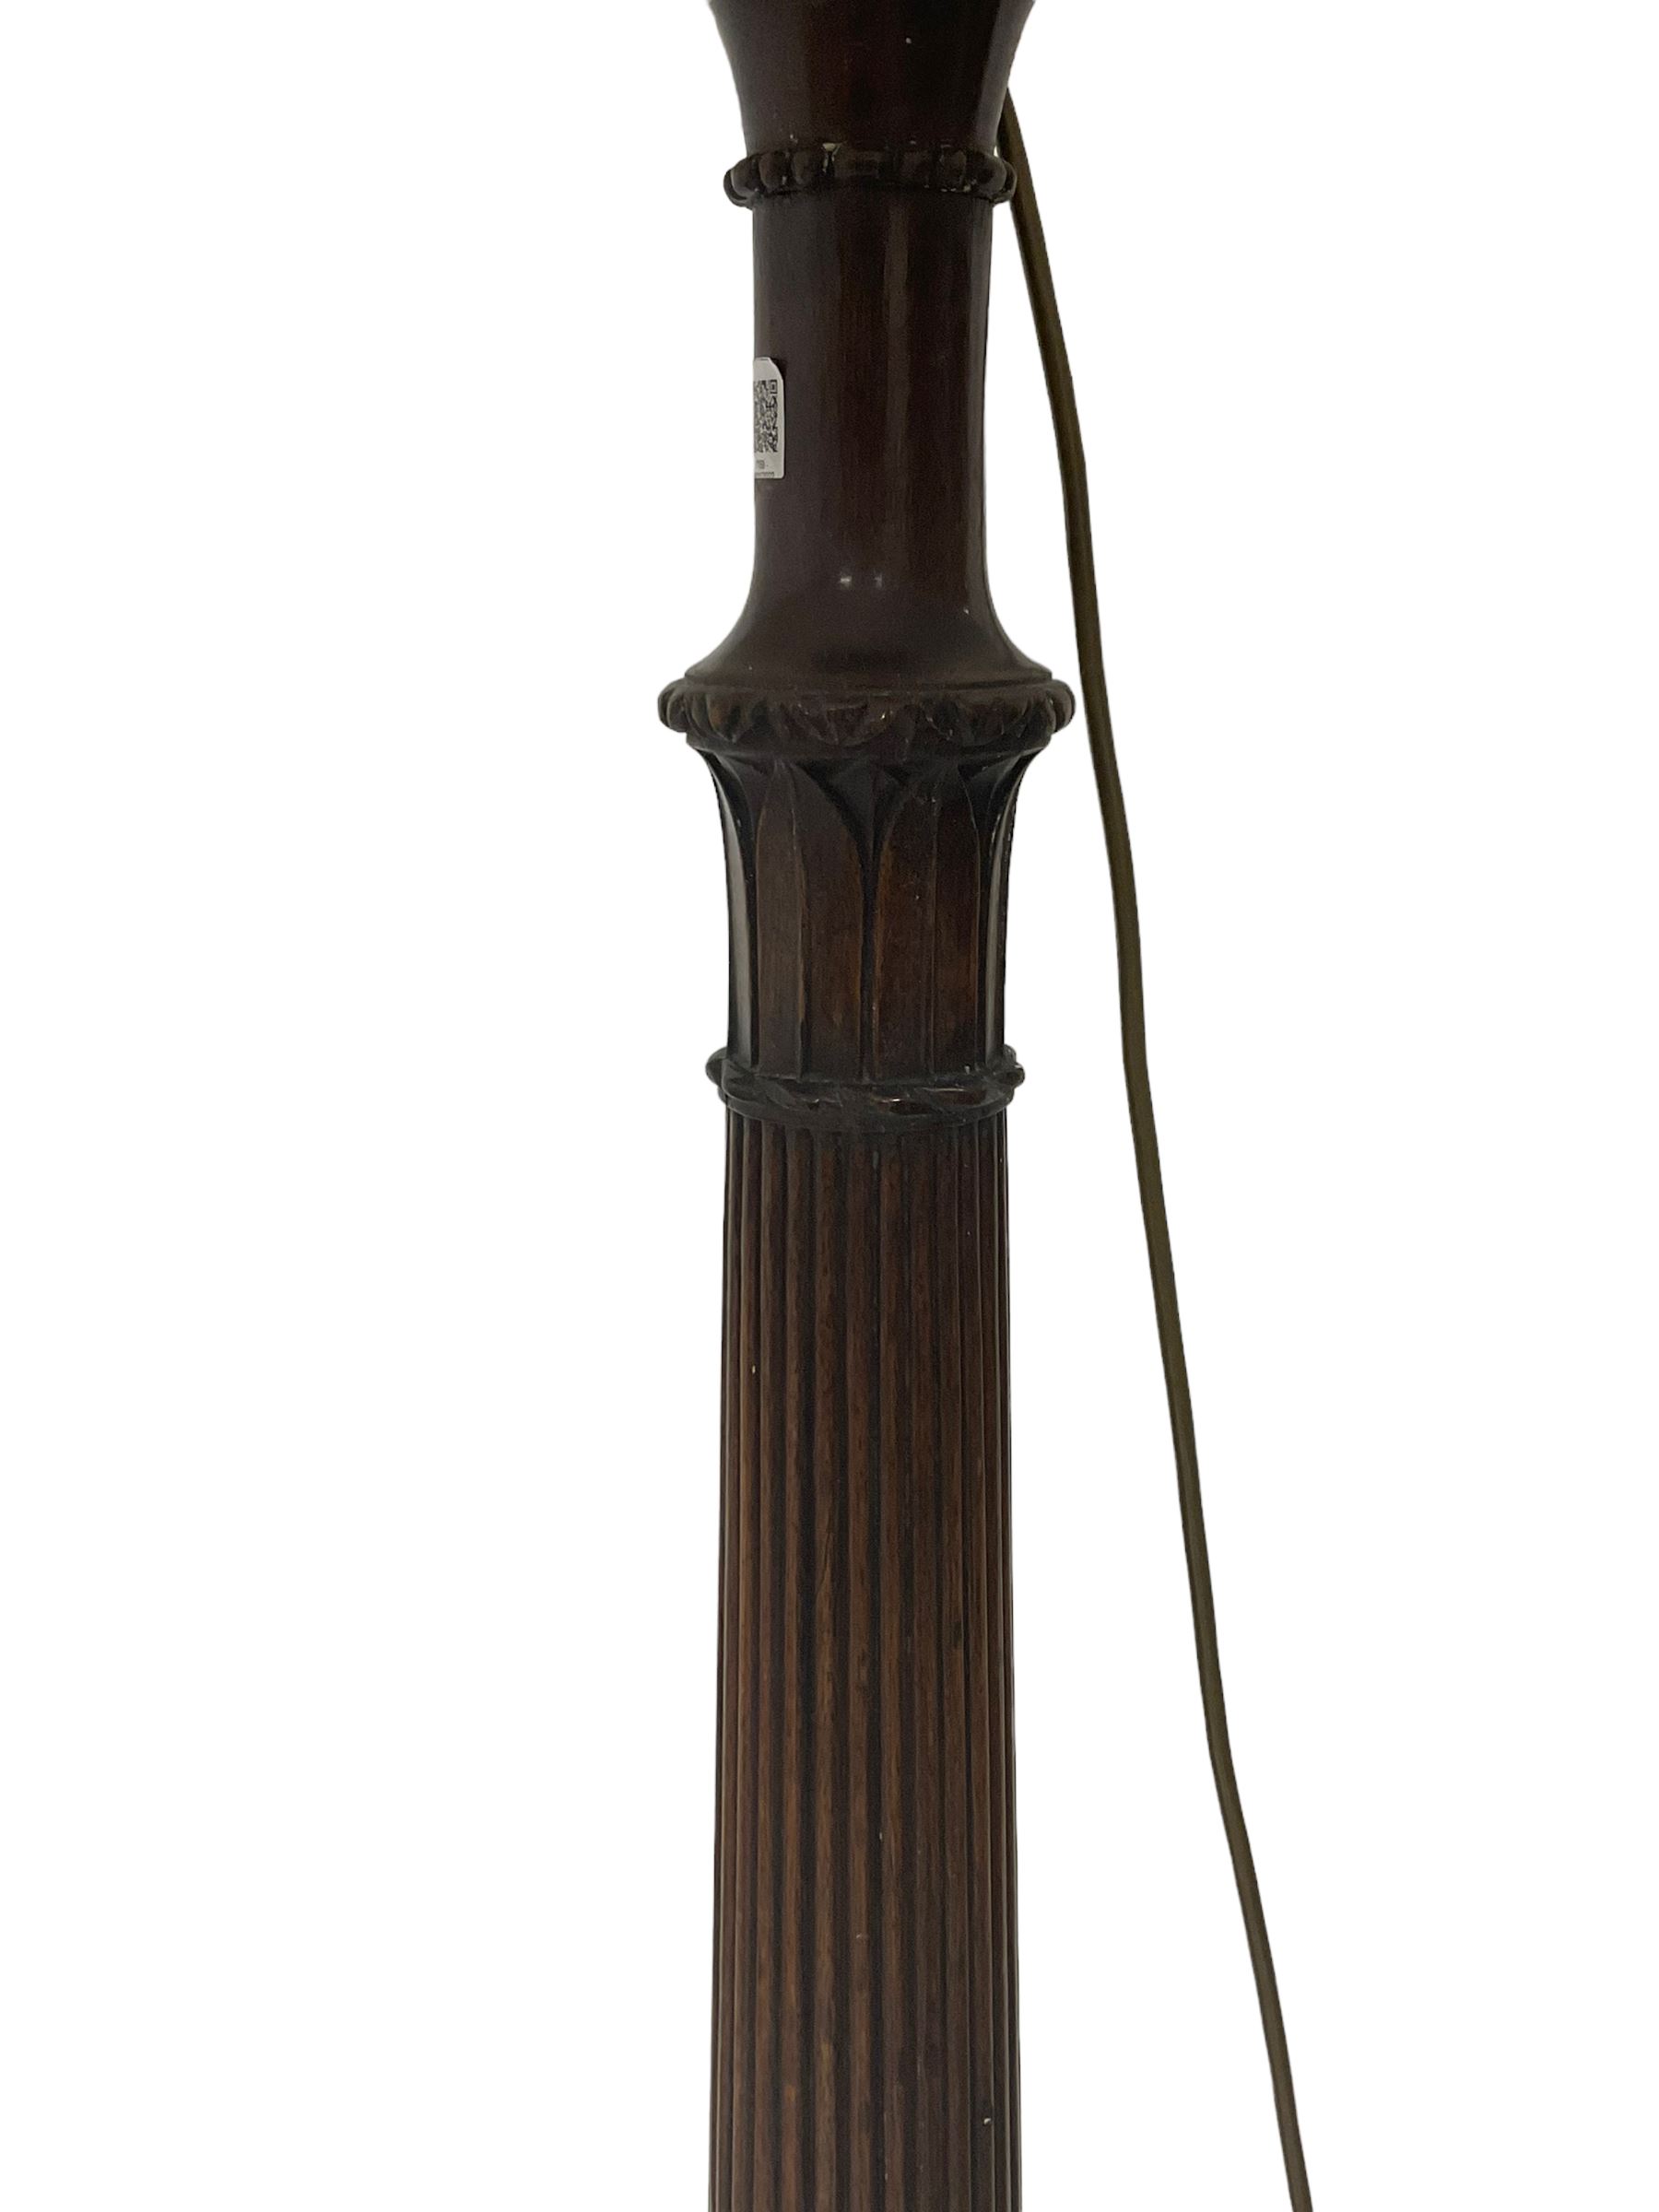 20th century standard lamp - Image 2 of 3